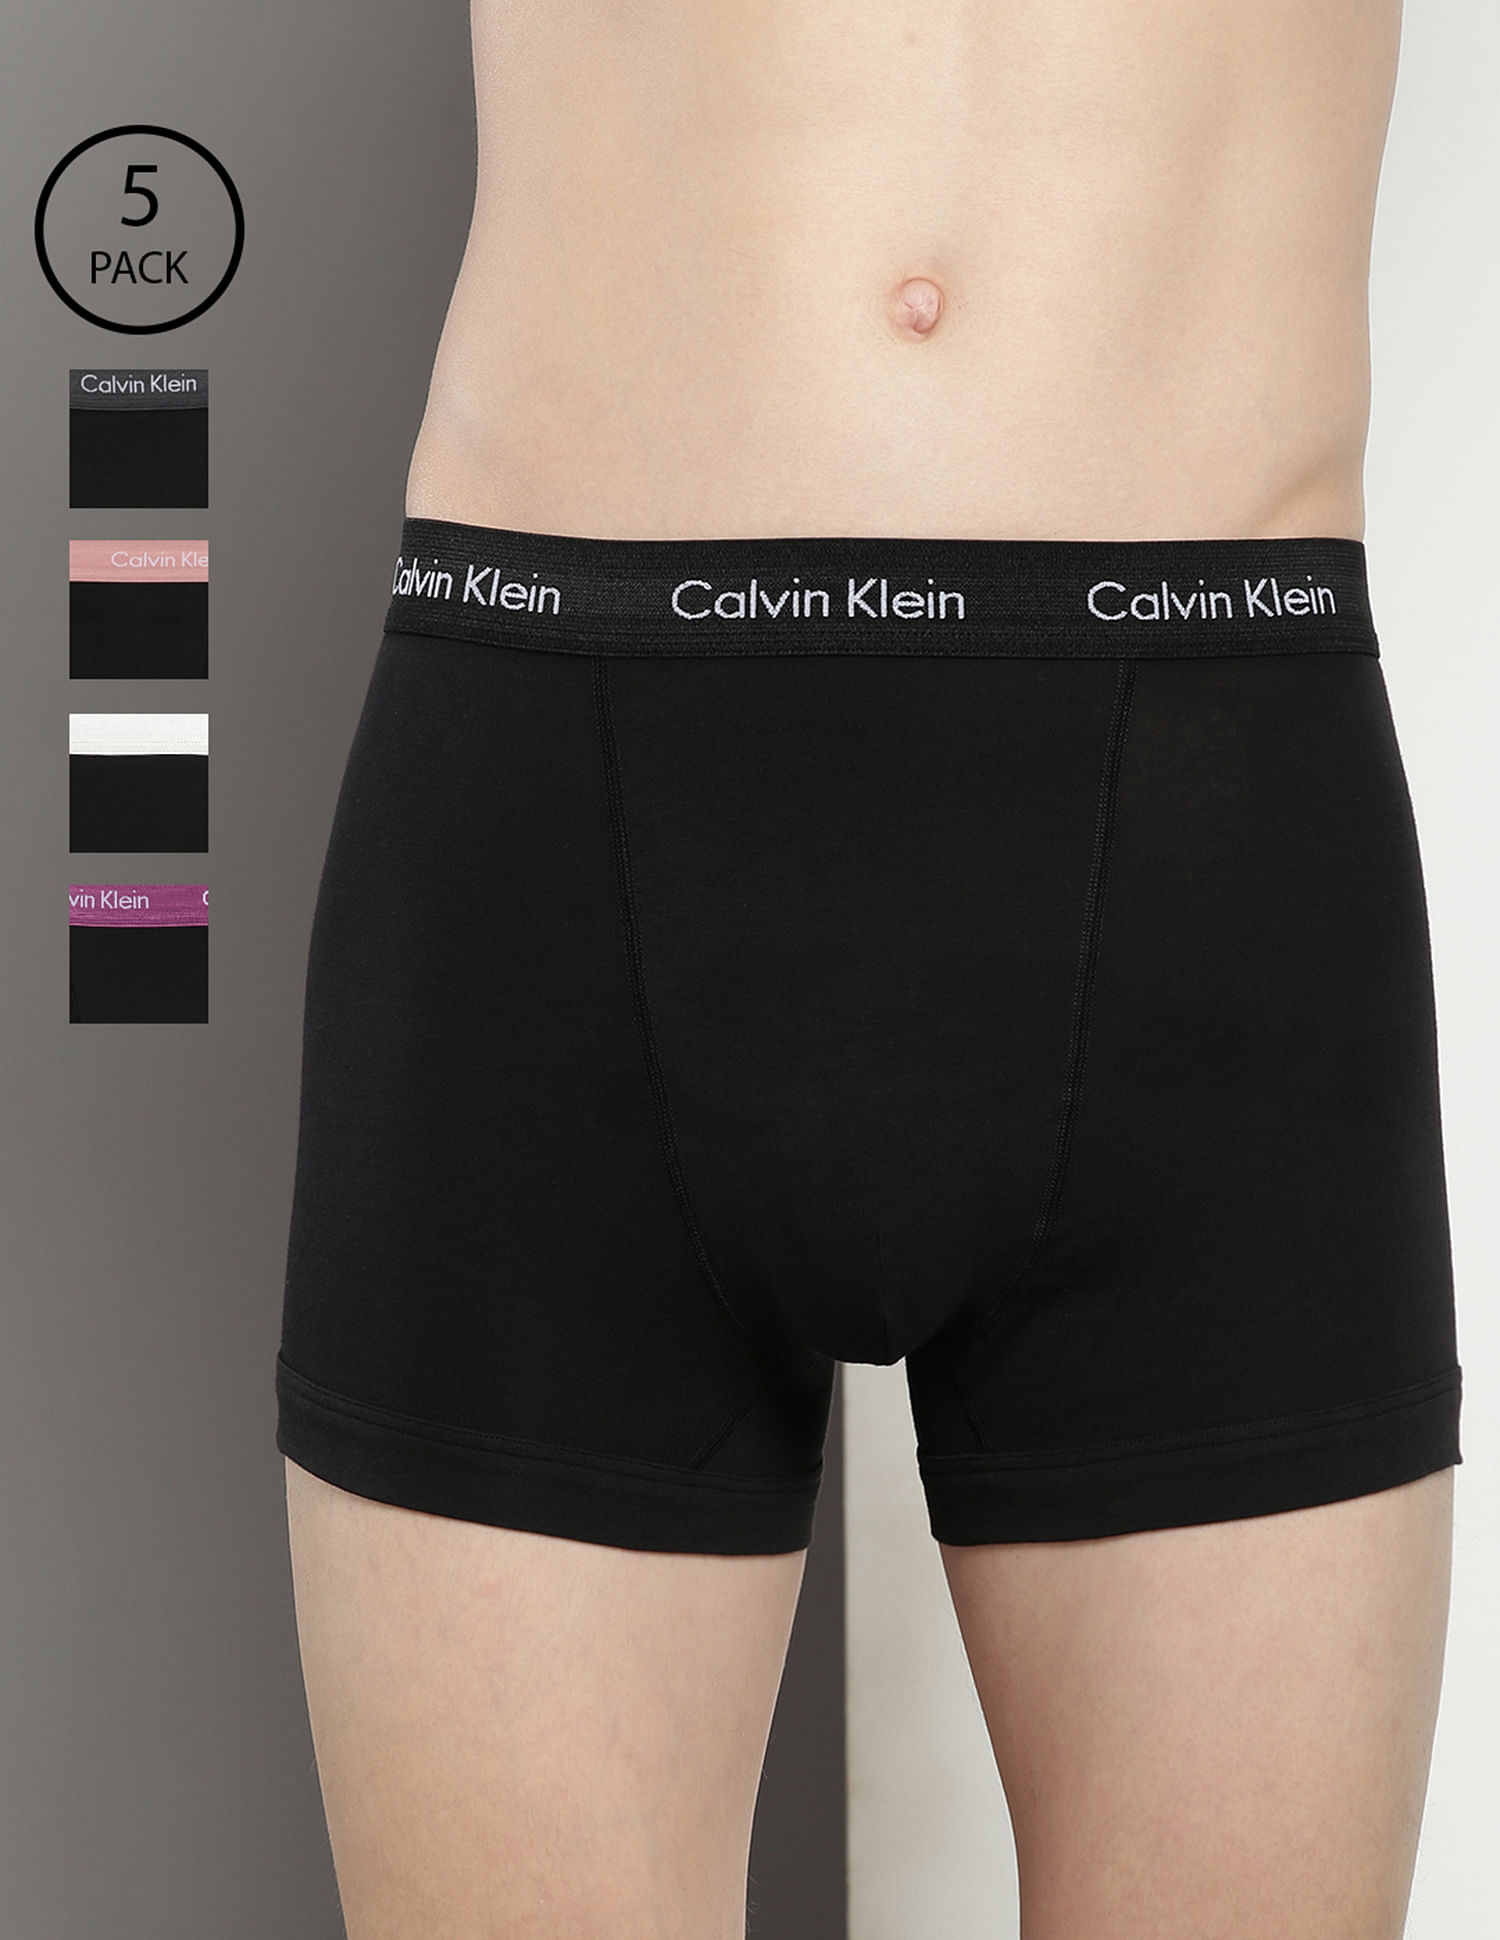 Calvin Klein Cotton Stretch Trunks 5 Pack In Black